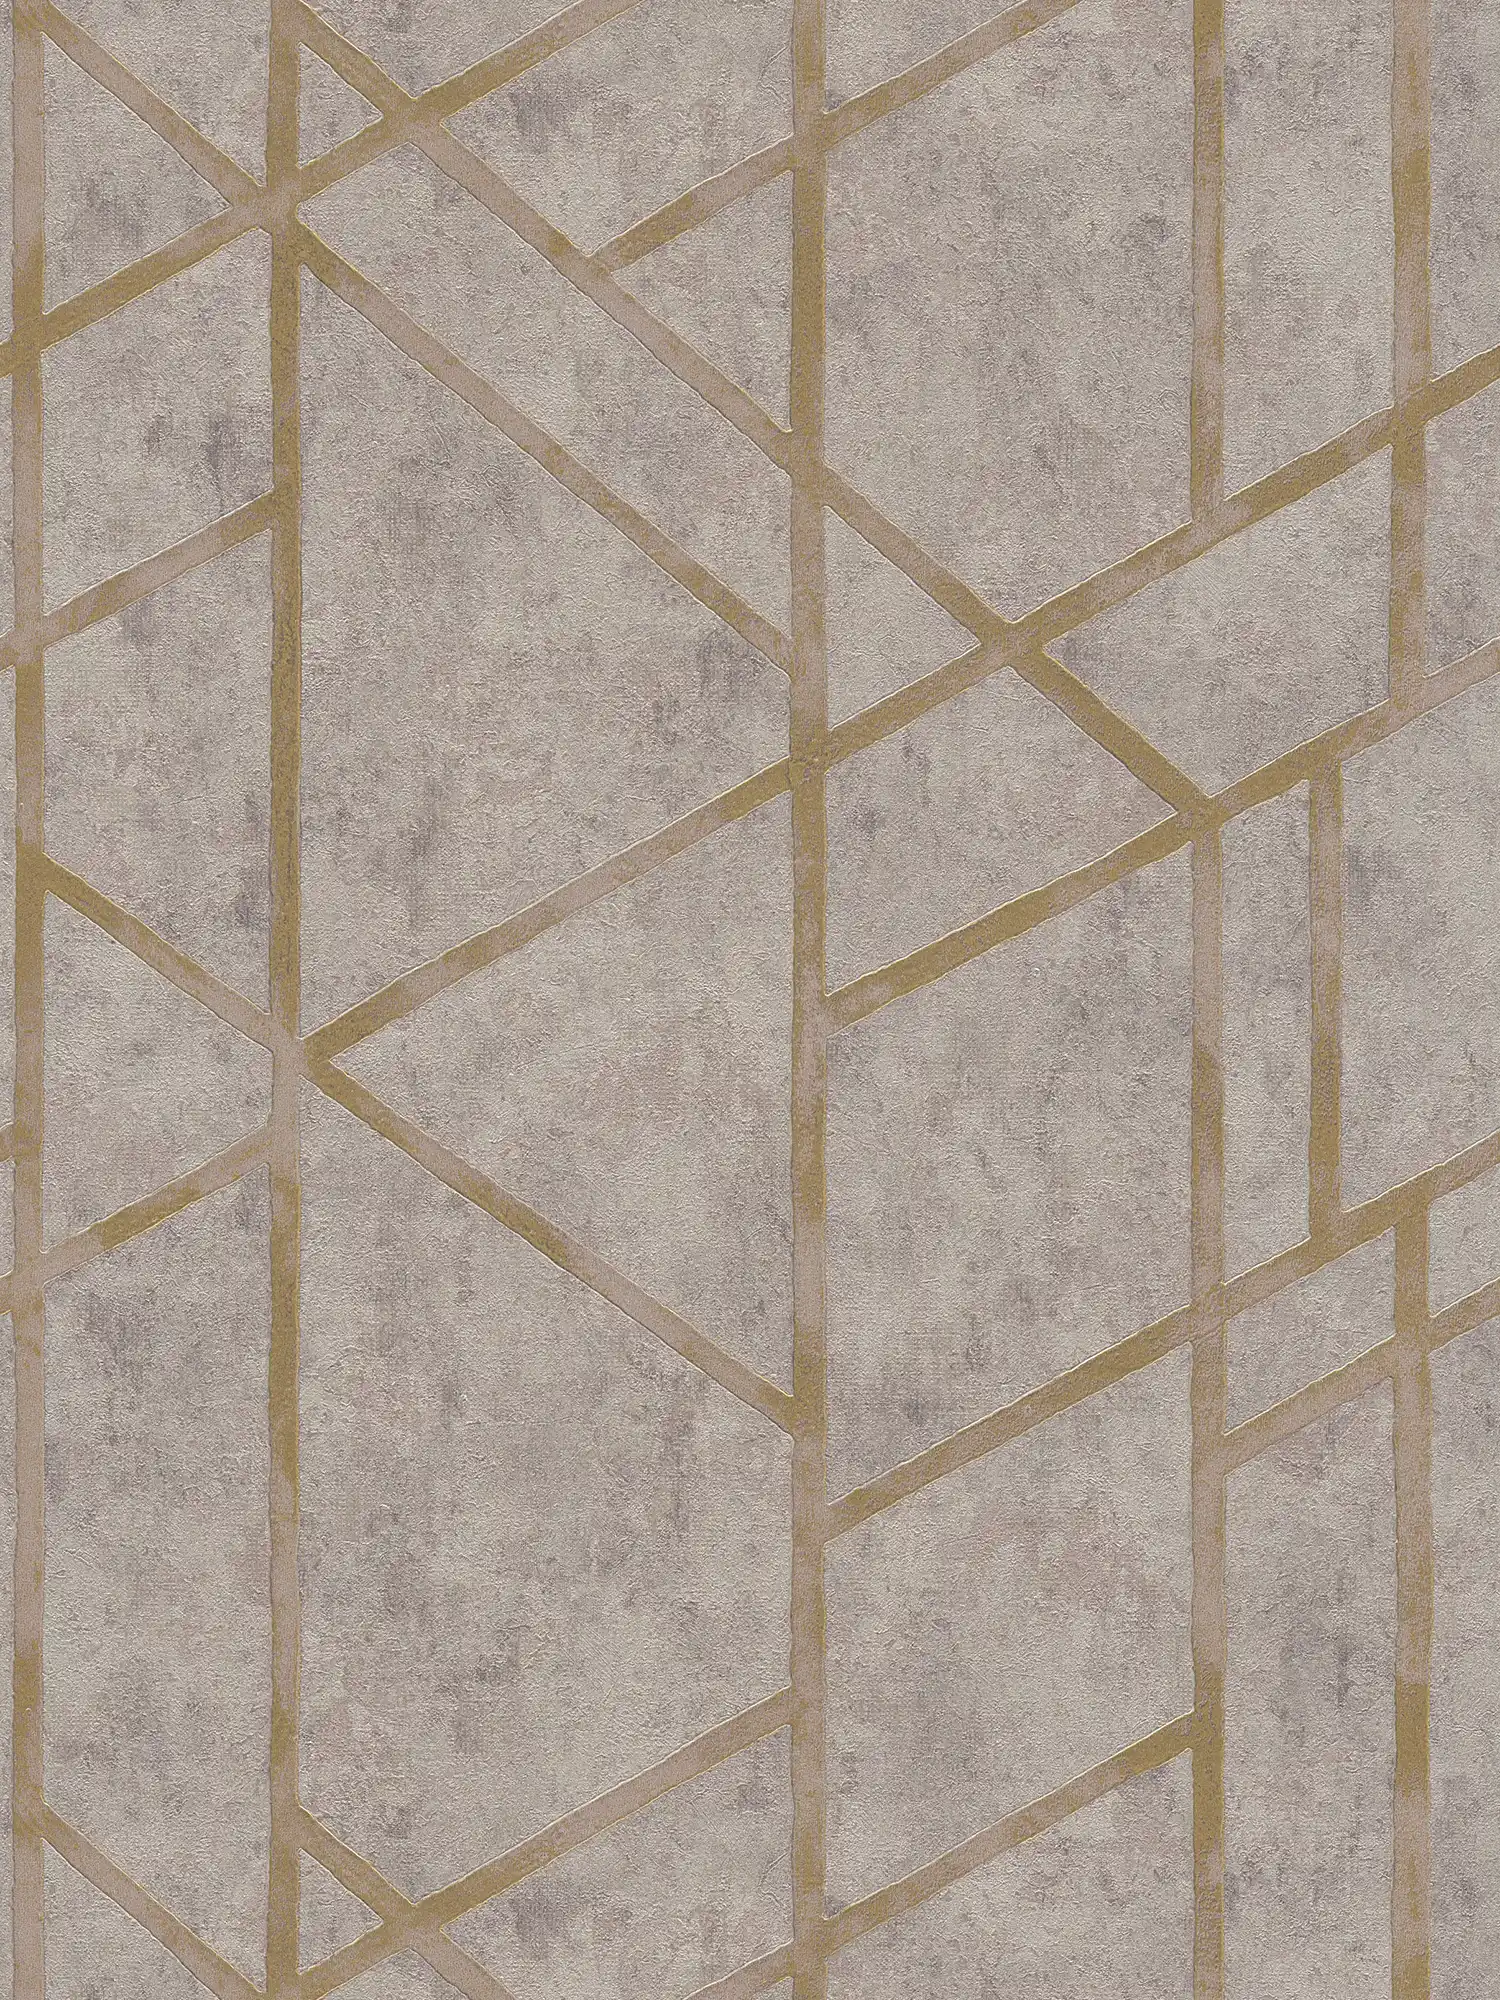         Betontapete mit goldenem Linien-Muster – Gold, Beige, Grau
    